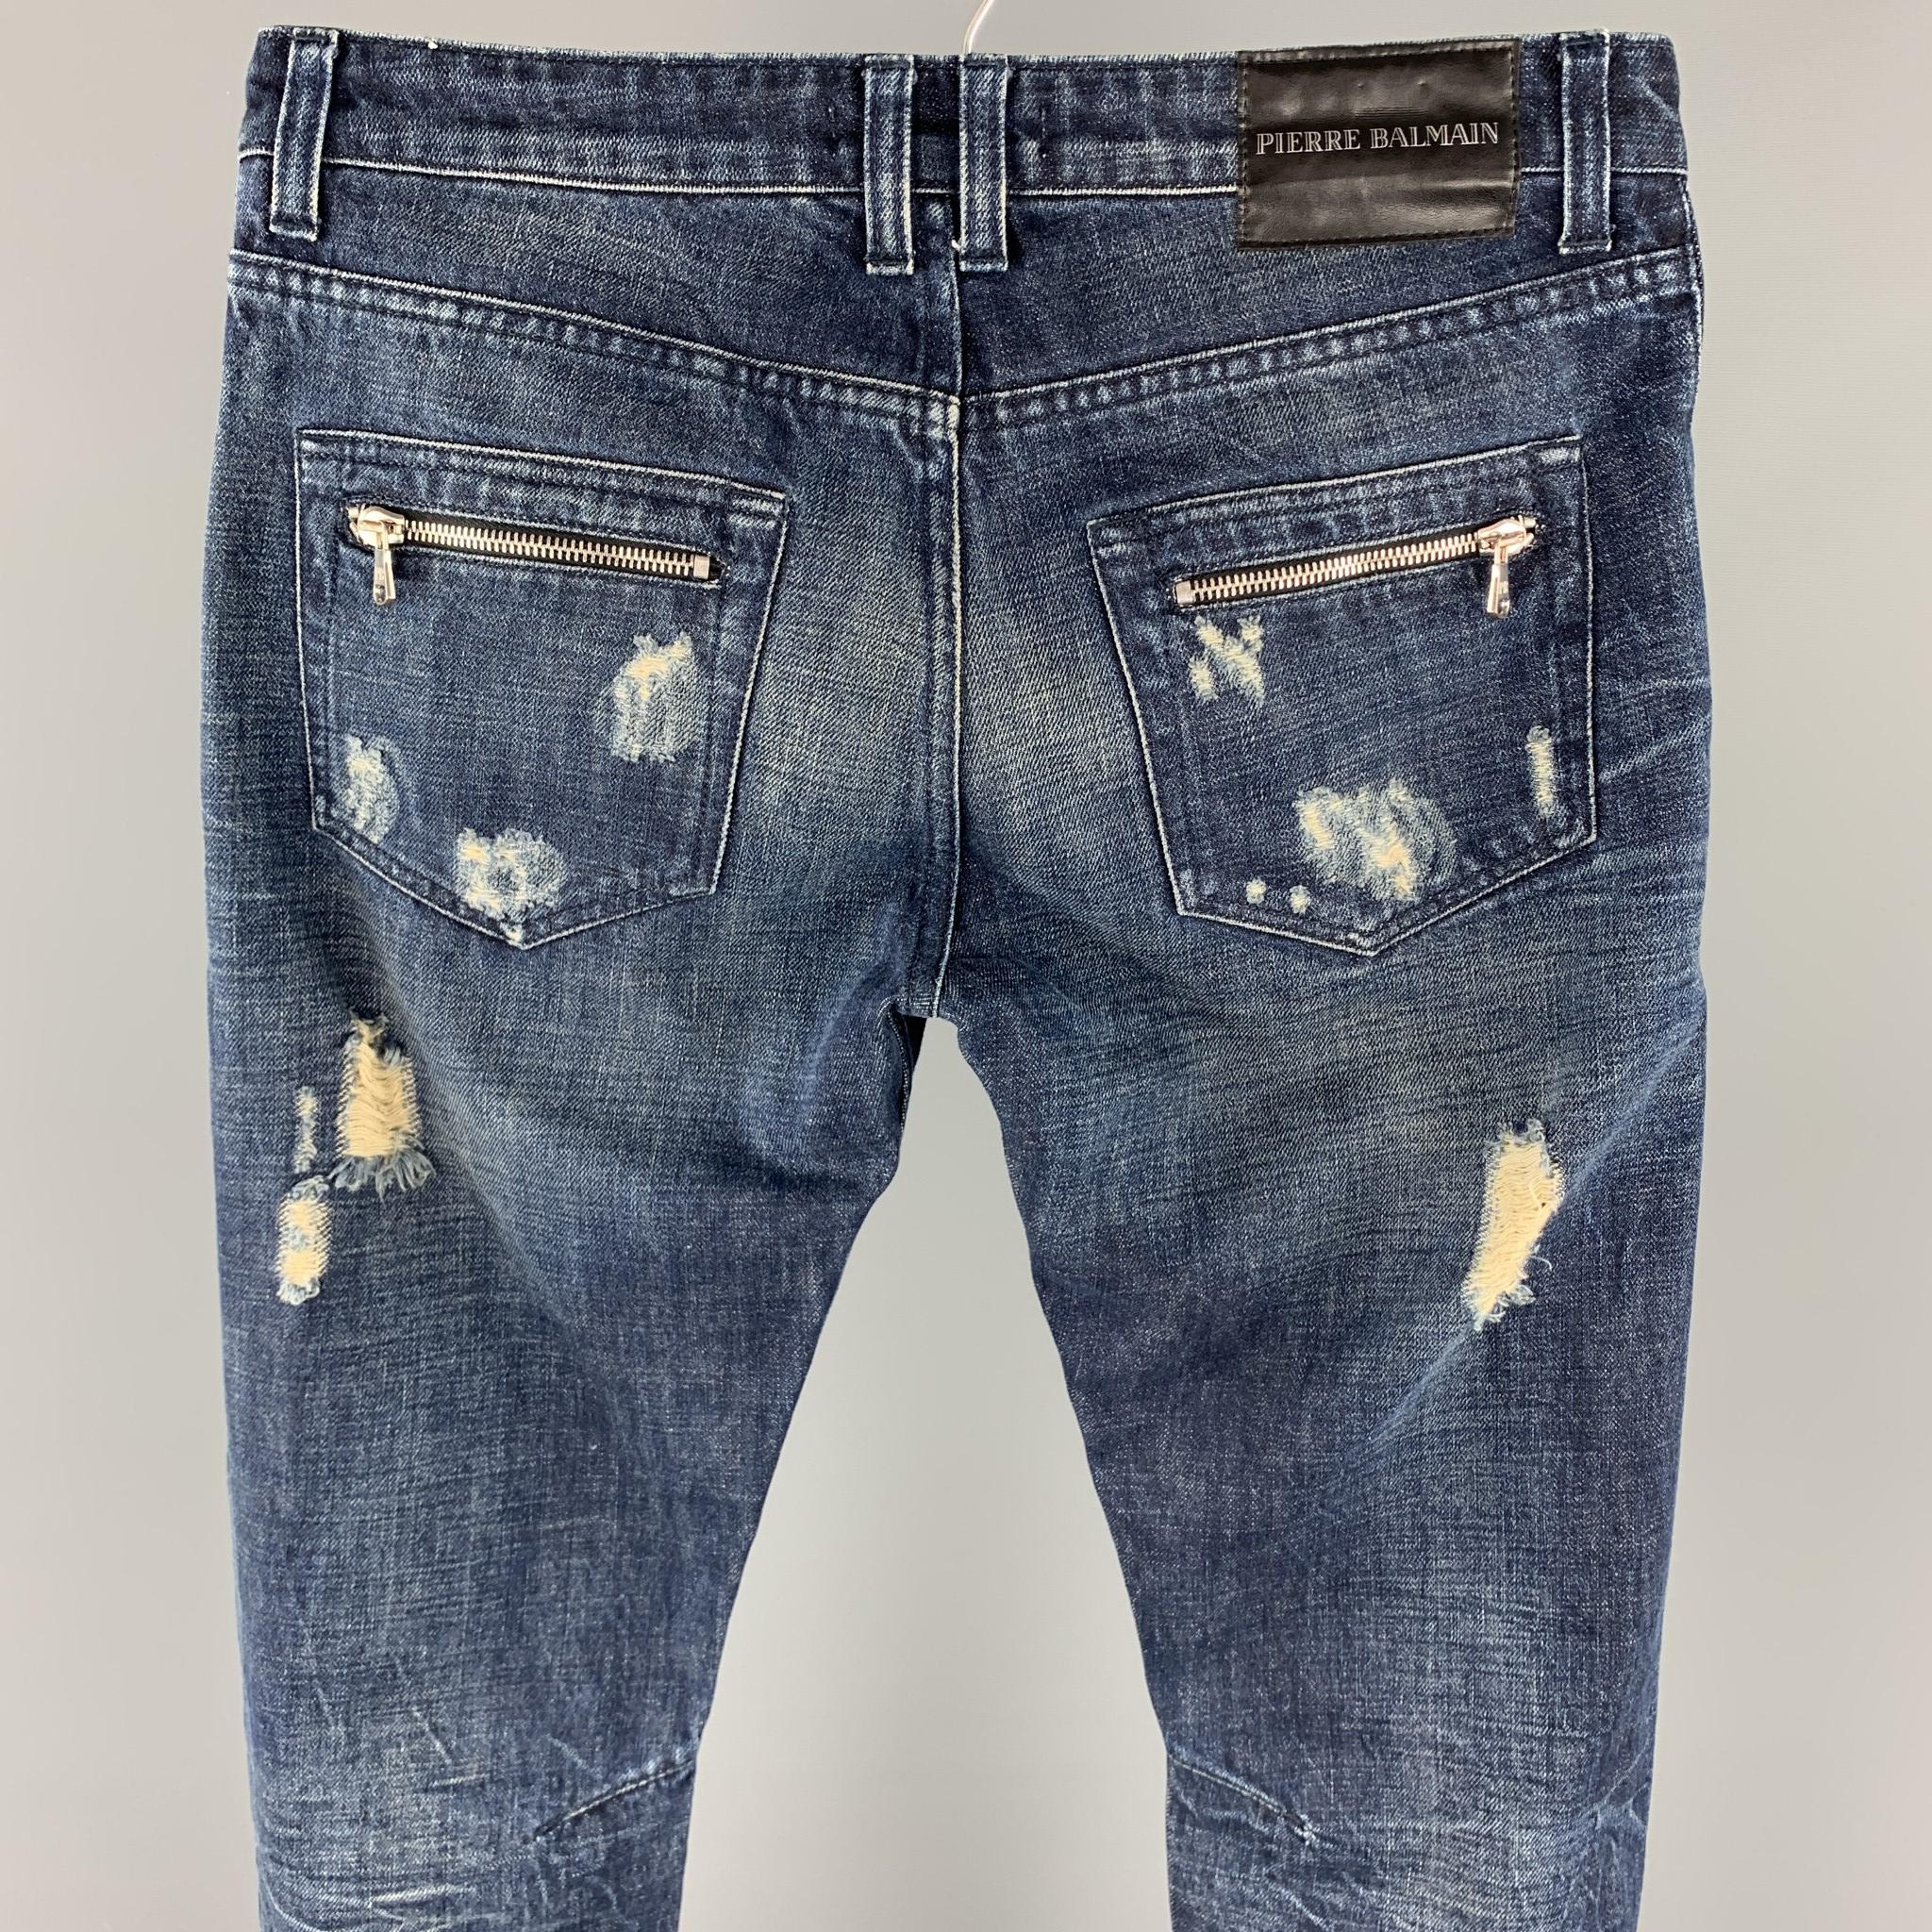 pierre balmain jeans